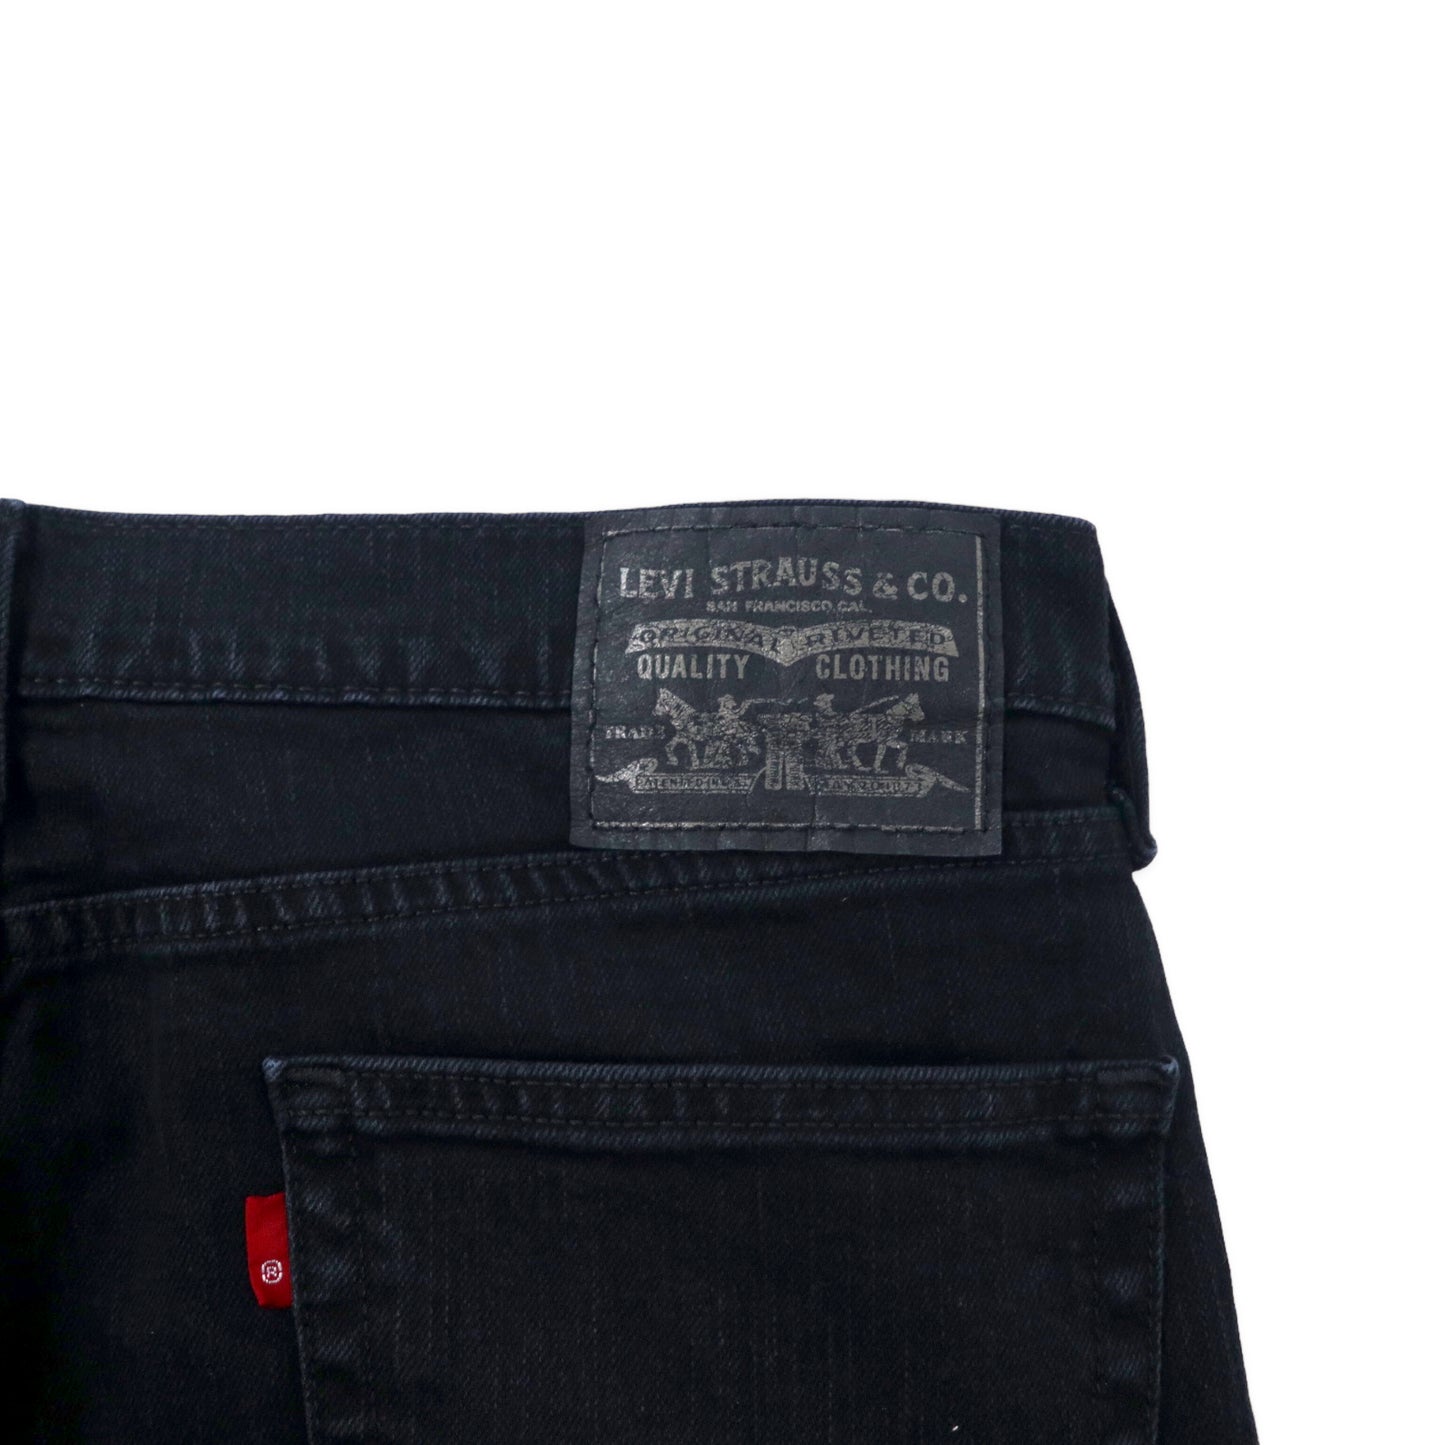 Levi's Black Denim Pants 34 Stretch skinny 62209-0016 Mexico Made 